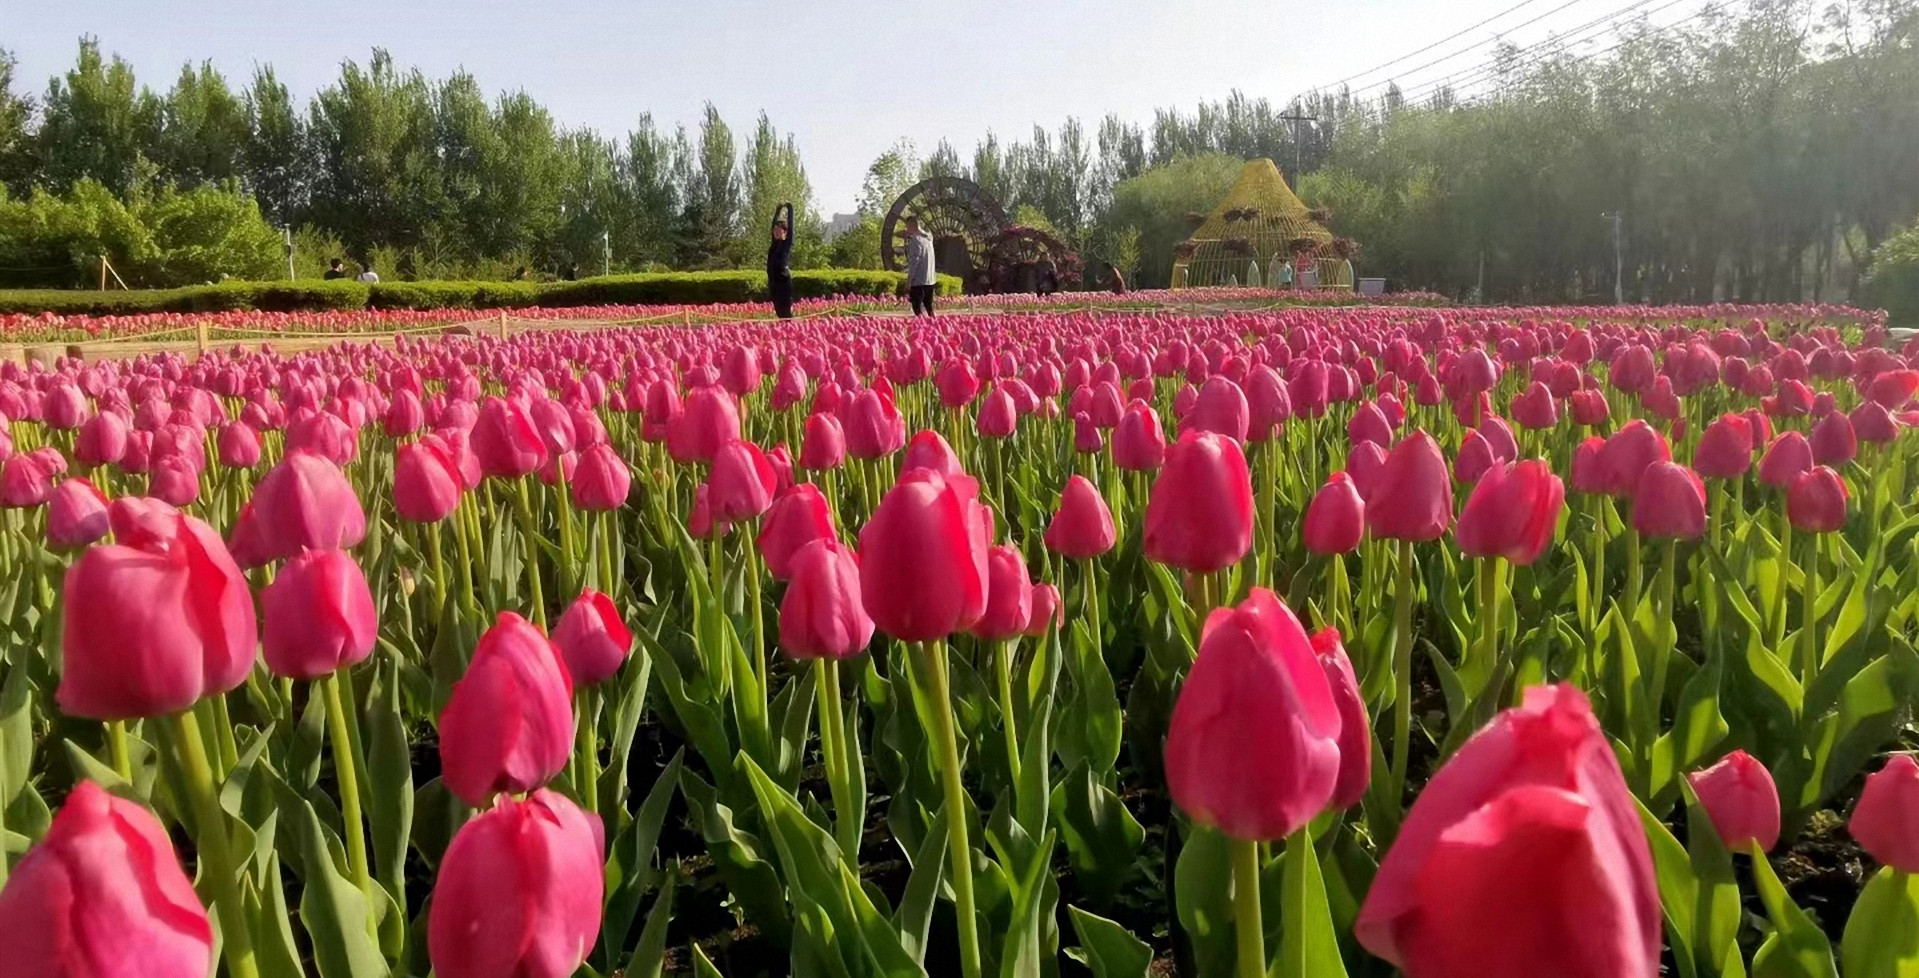 Visitors tiptoe through the tulips in Changchun